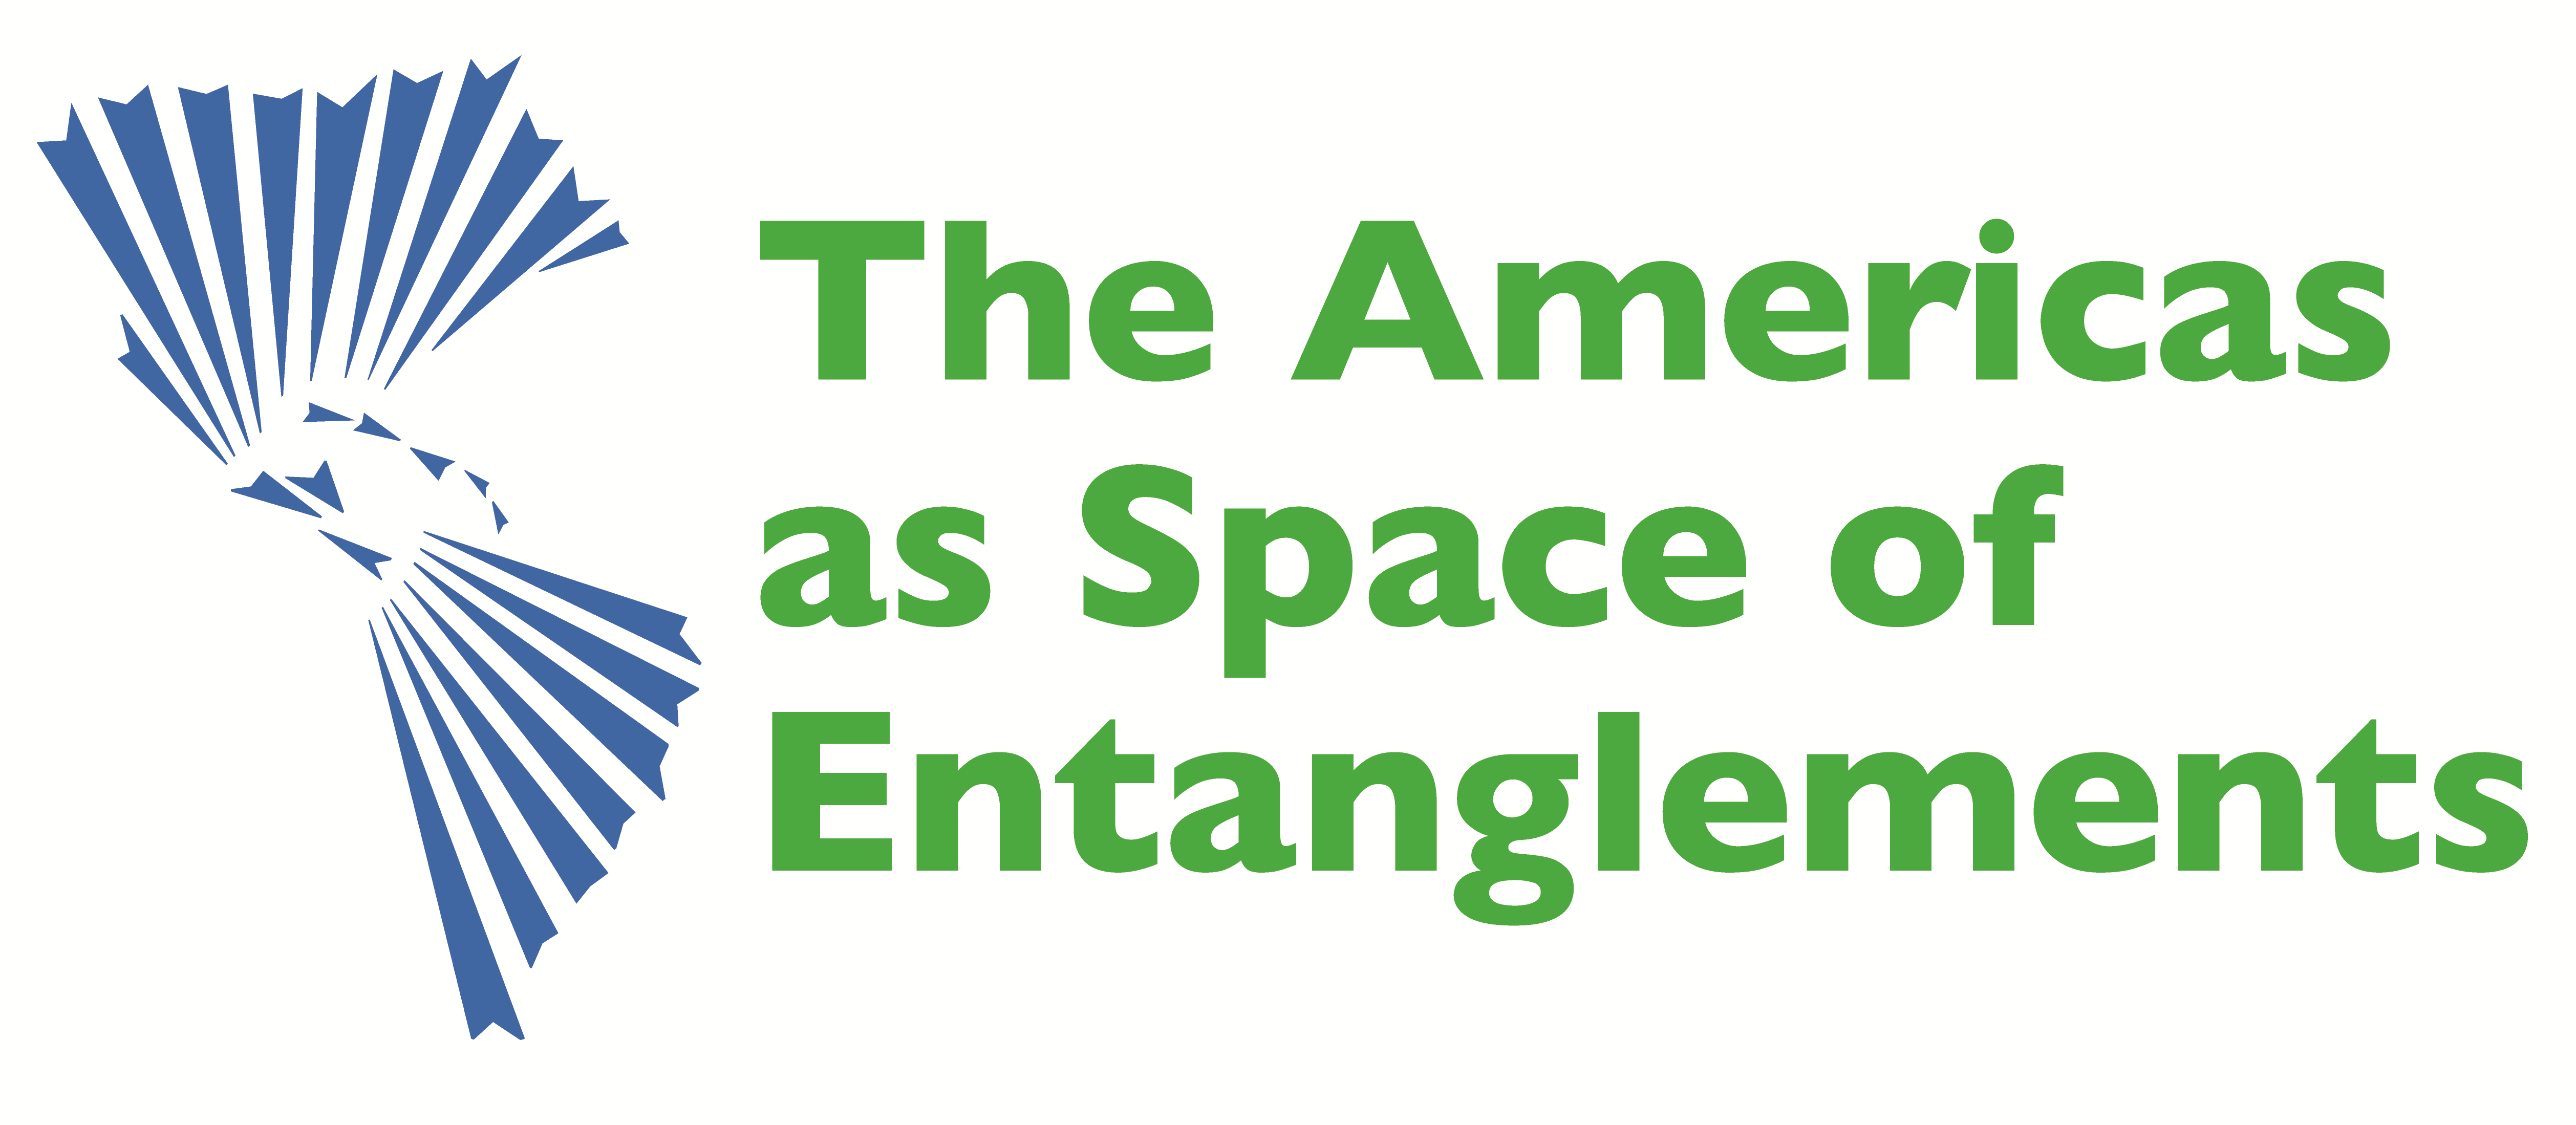 logo des entangled americas projekt (abstrakte darstellung der americas)